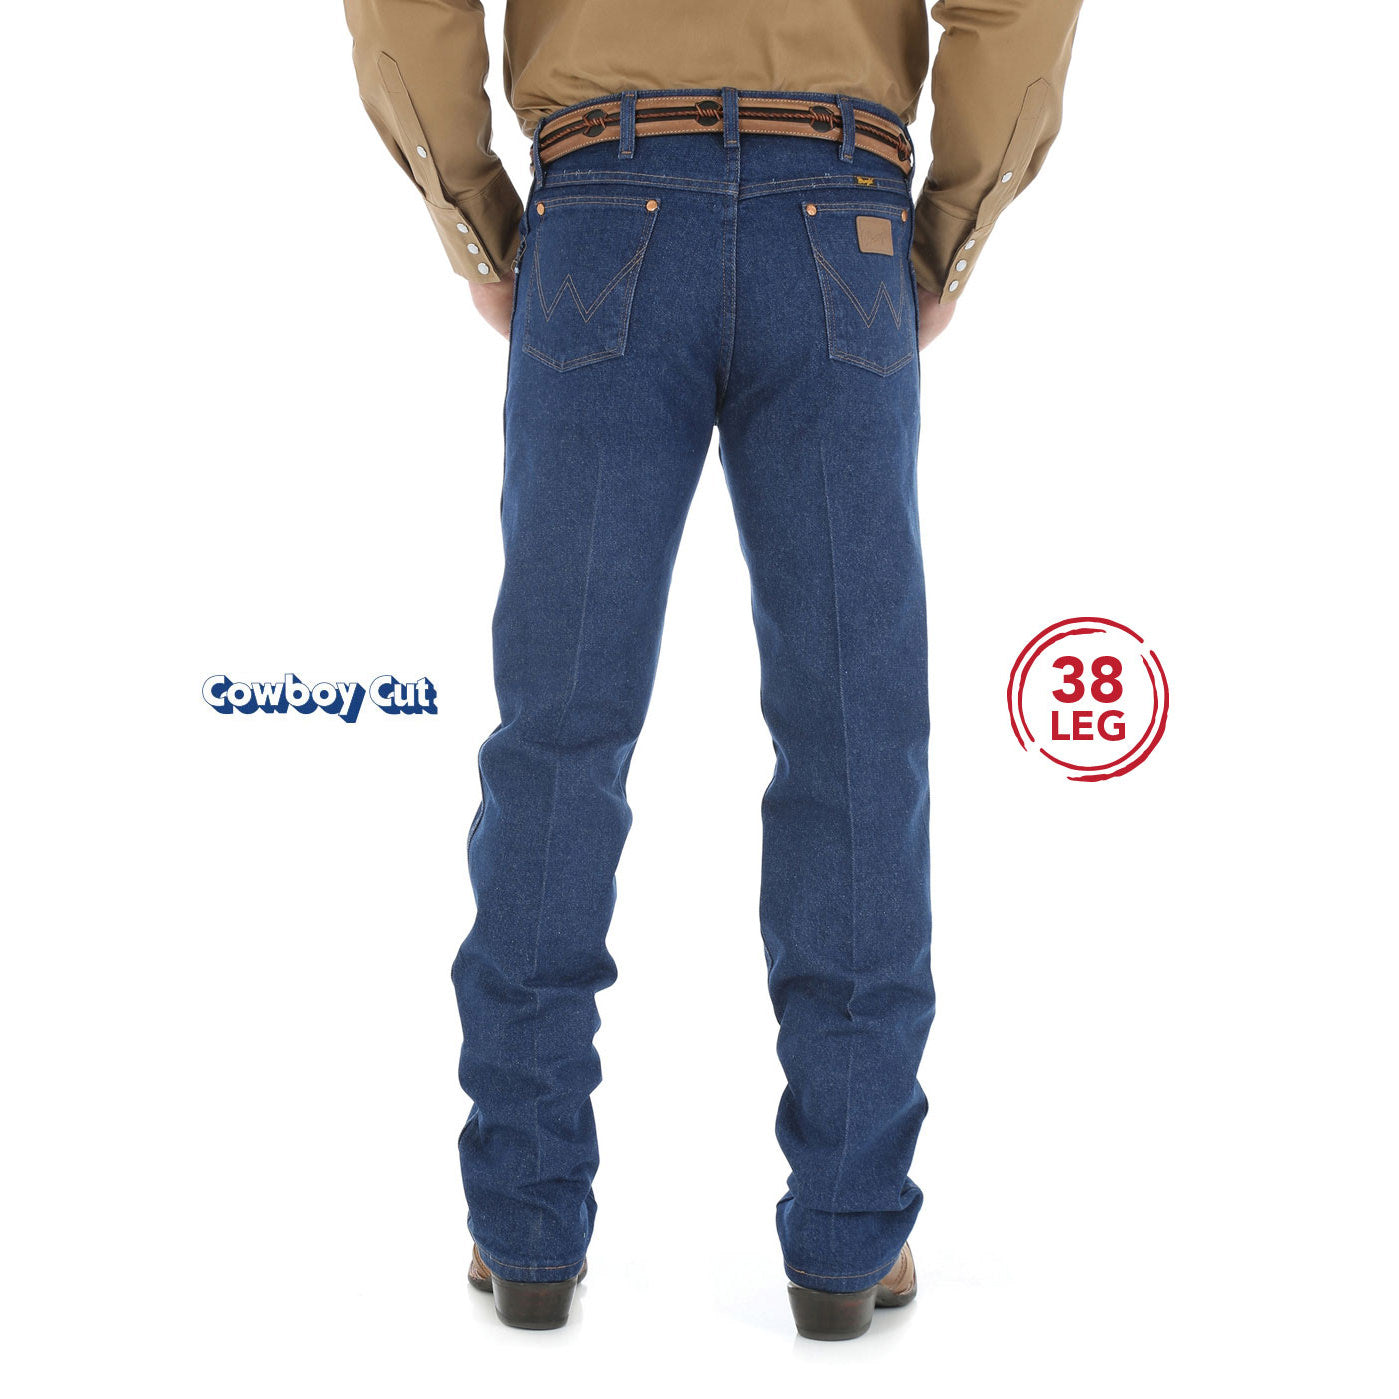 Wrangler Mens Jeans | Cowboy Cut Original | 13MWZPW | 38 Leg